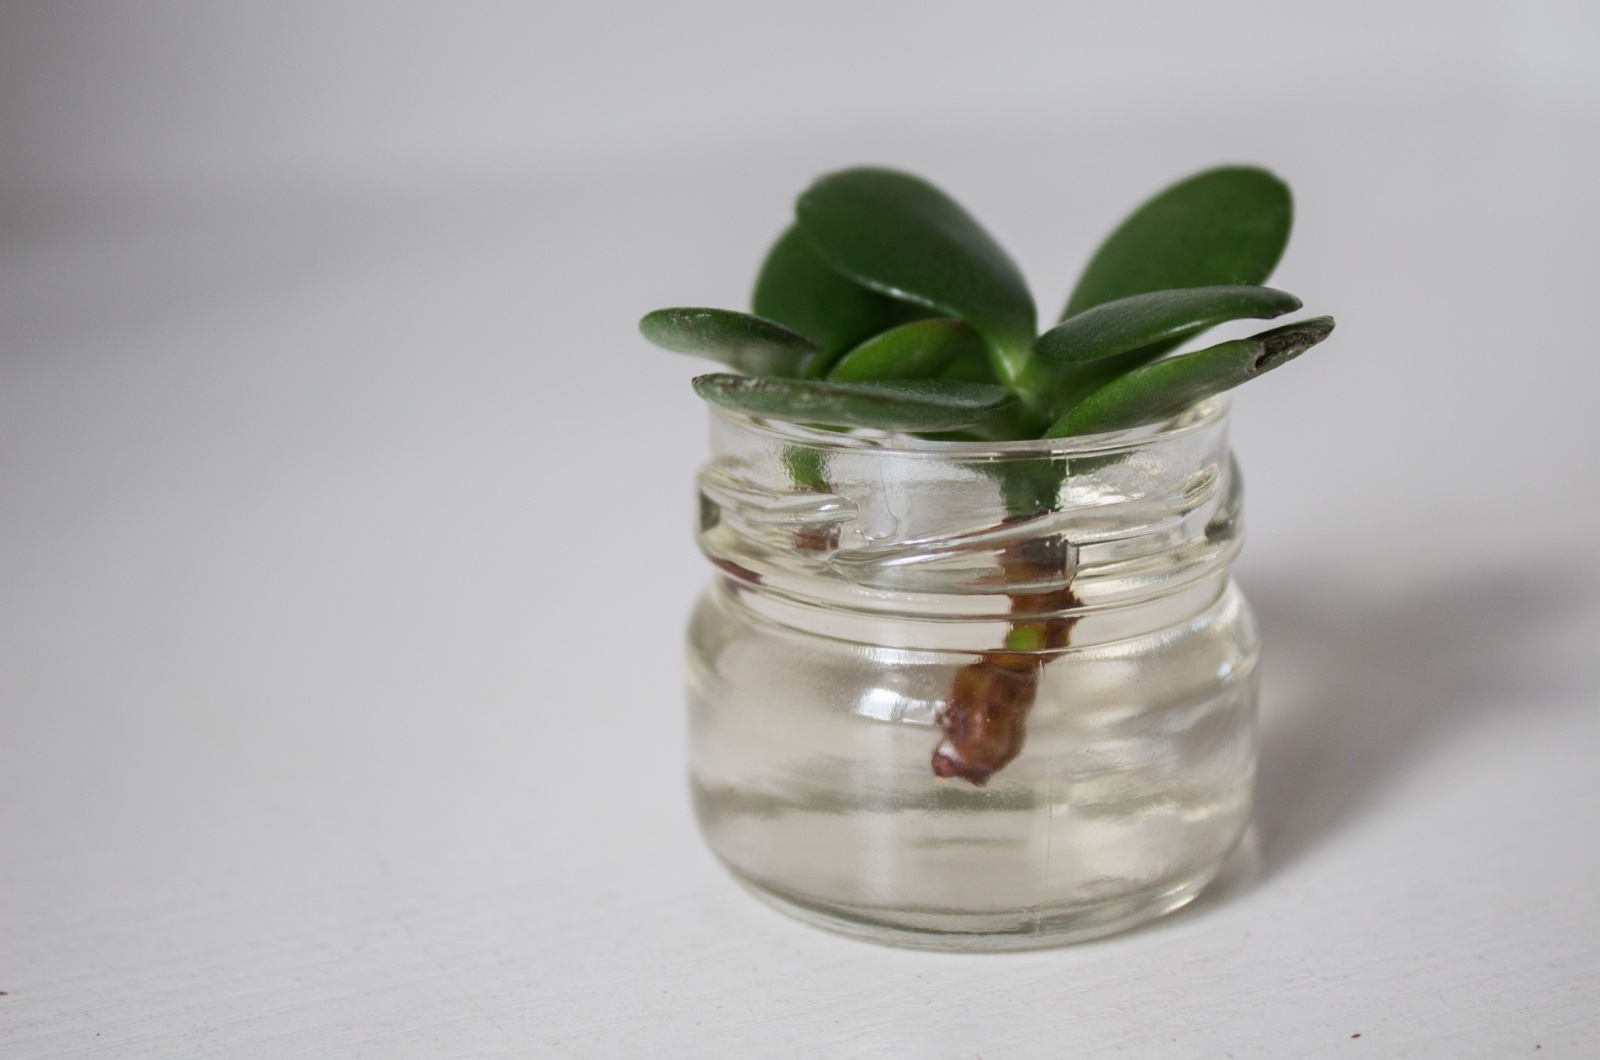 money tree plant propagation in small jar full of water